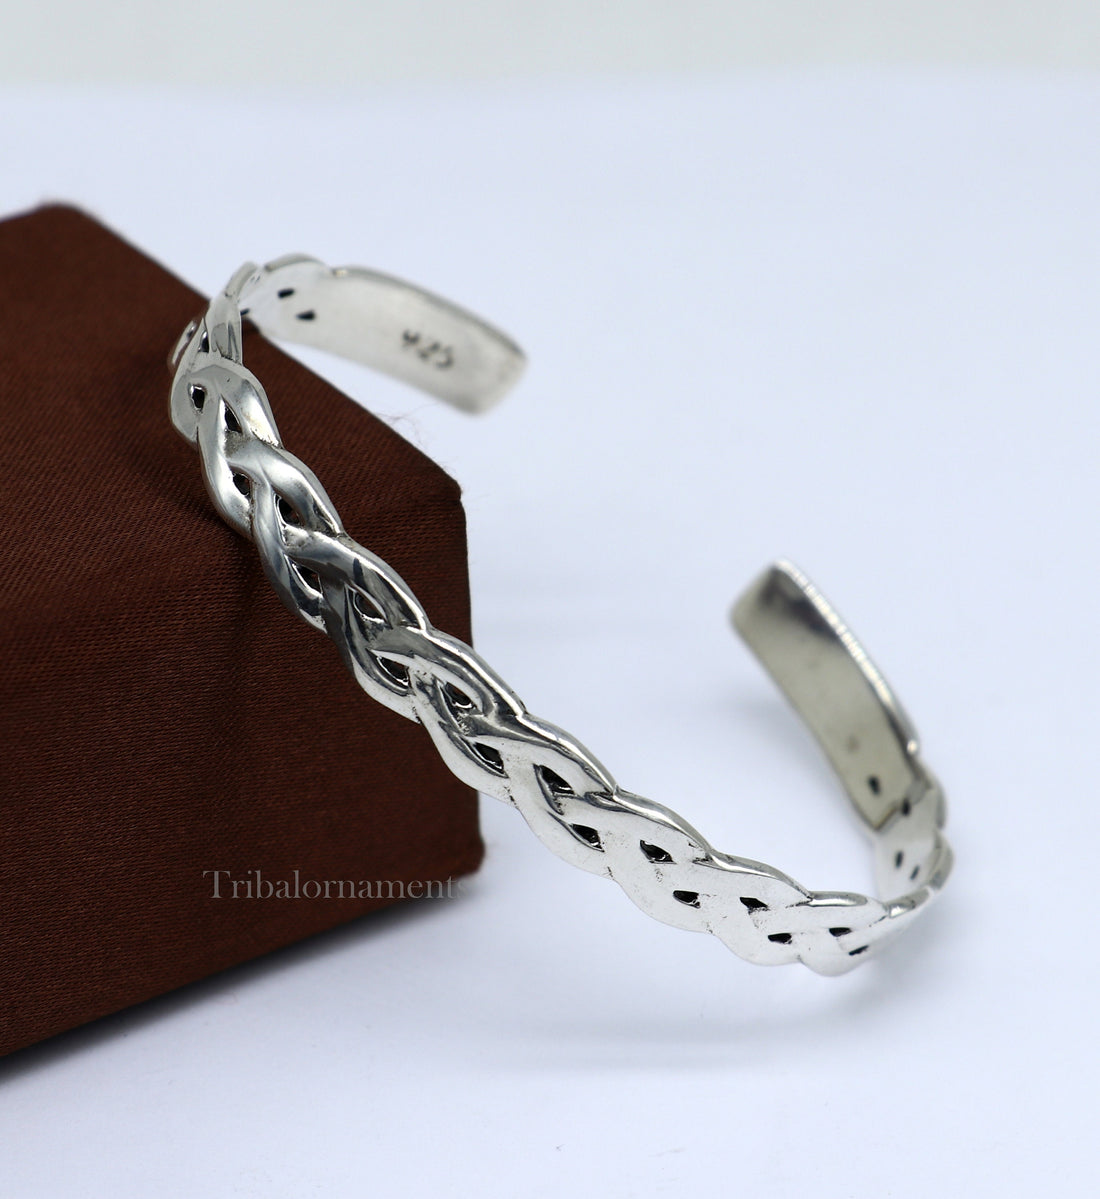 Elegant stylish design 925 sterling silver handmade adjustable cuff bangle bracelet unsex gifting jewelry, solid cuff bracelet nsk371 - TRIBAL ORNAMENTS